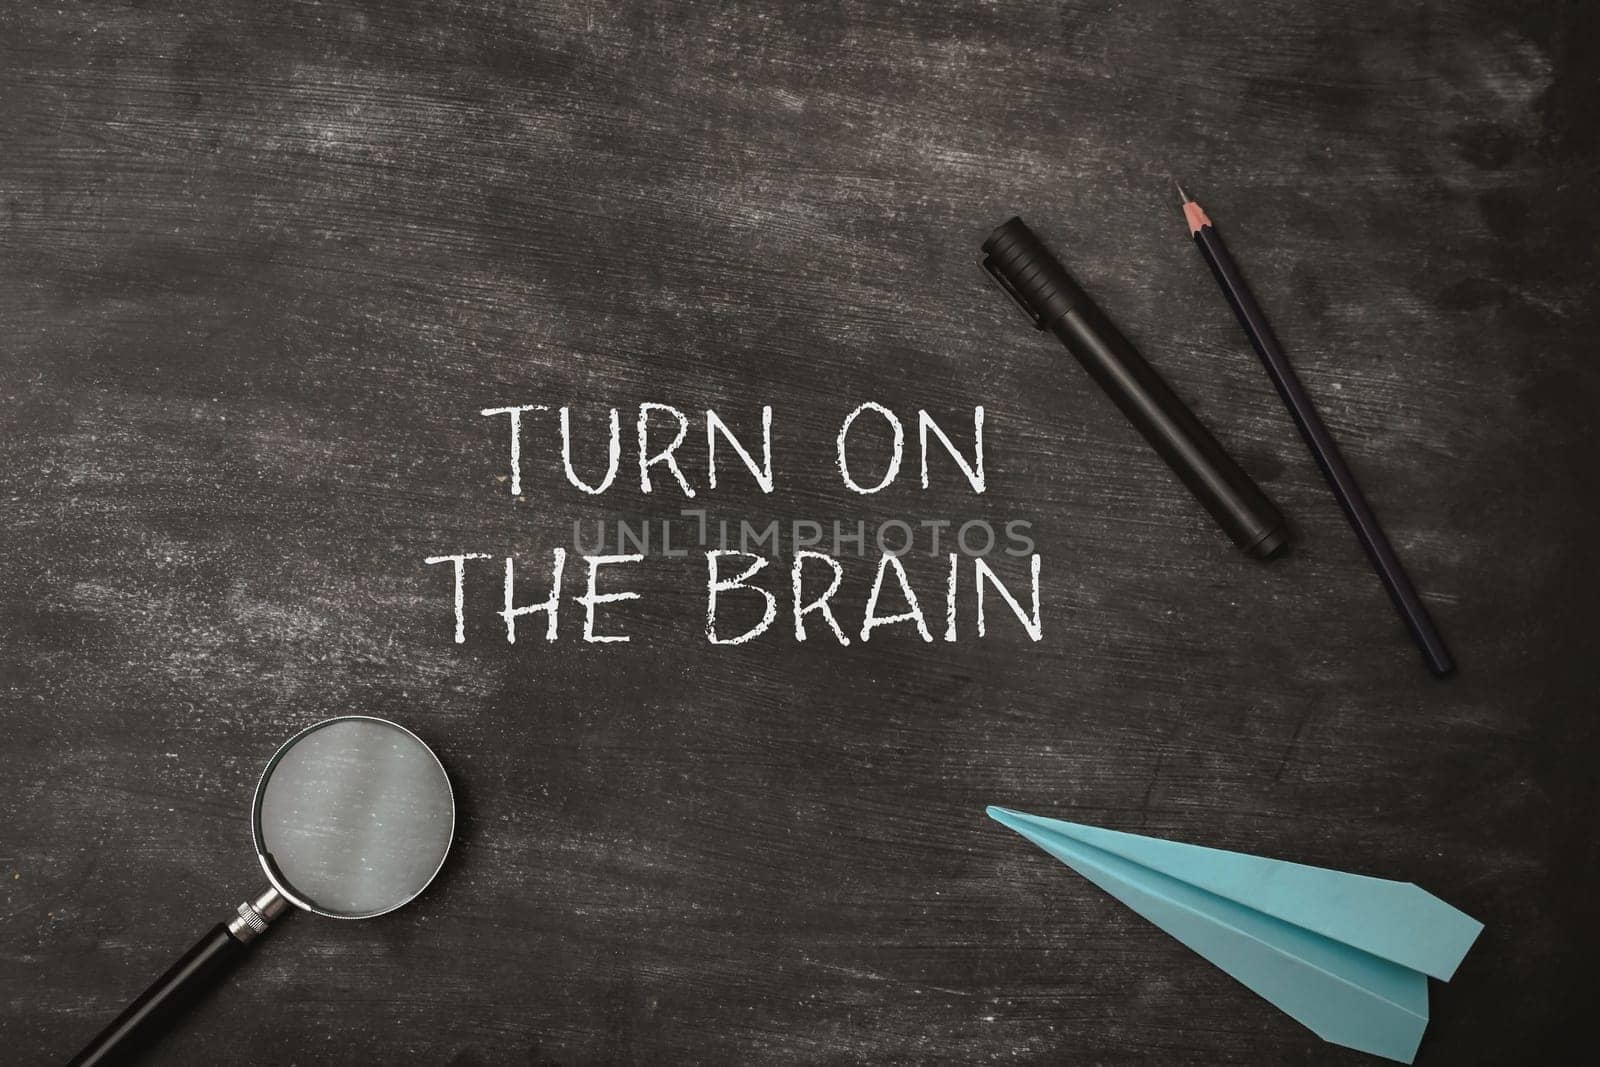 Turn on the brain is written on the chalkboard by Alla_Morozova93